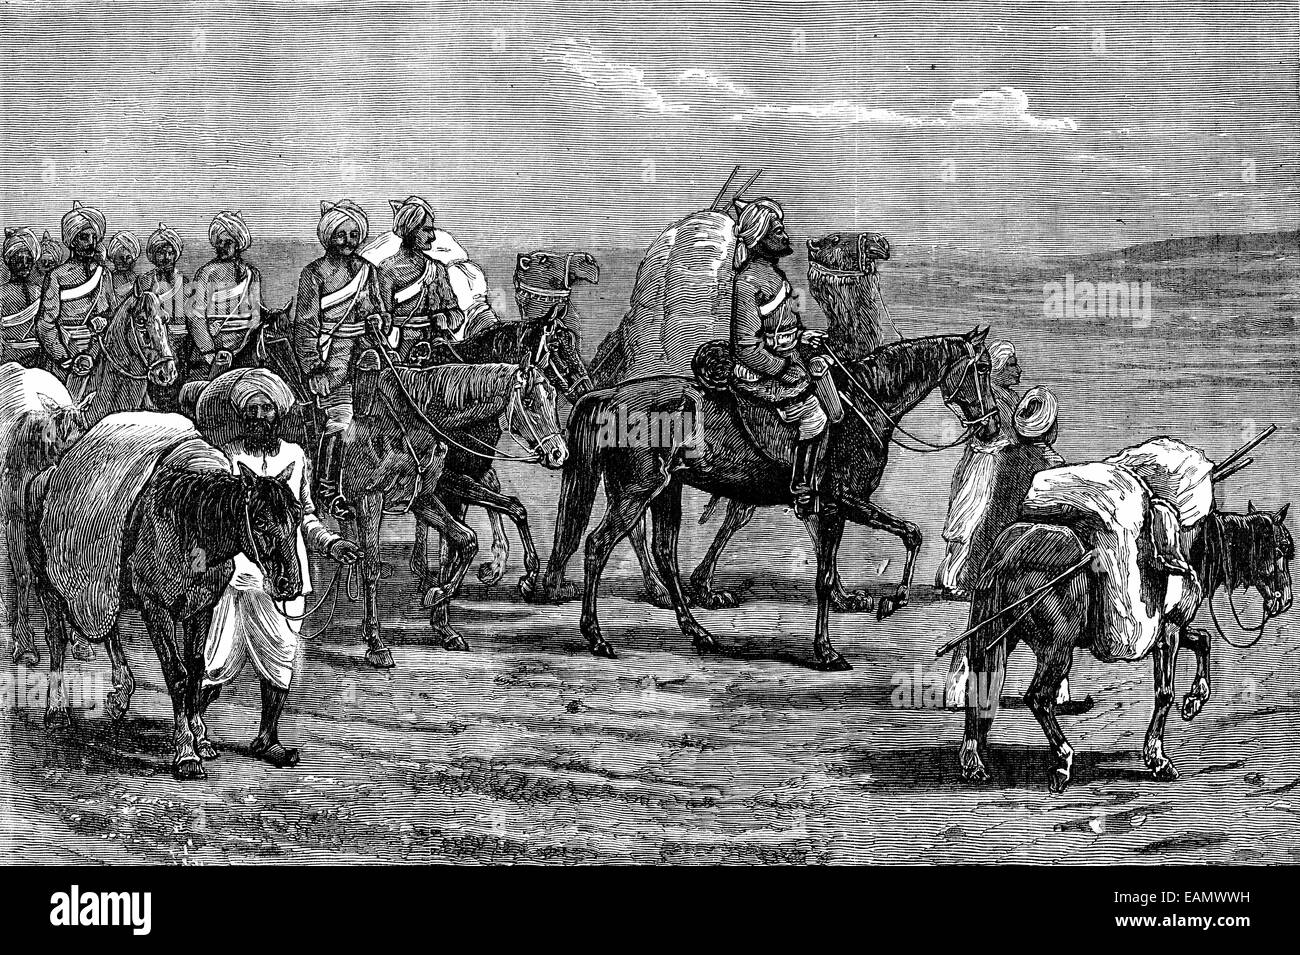 Afghanistan. Fahrer des indischen Kontingents, graviert Vintage Illustration. Journal des Voyages, Reise-Journal (1879 / 80). Stockfoto